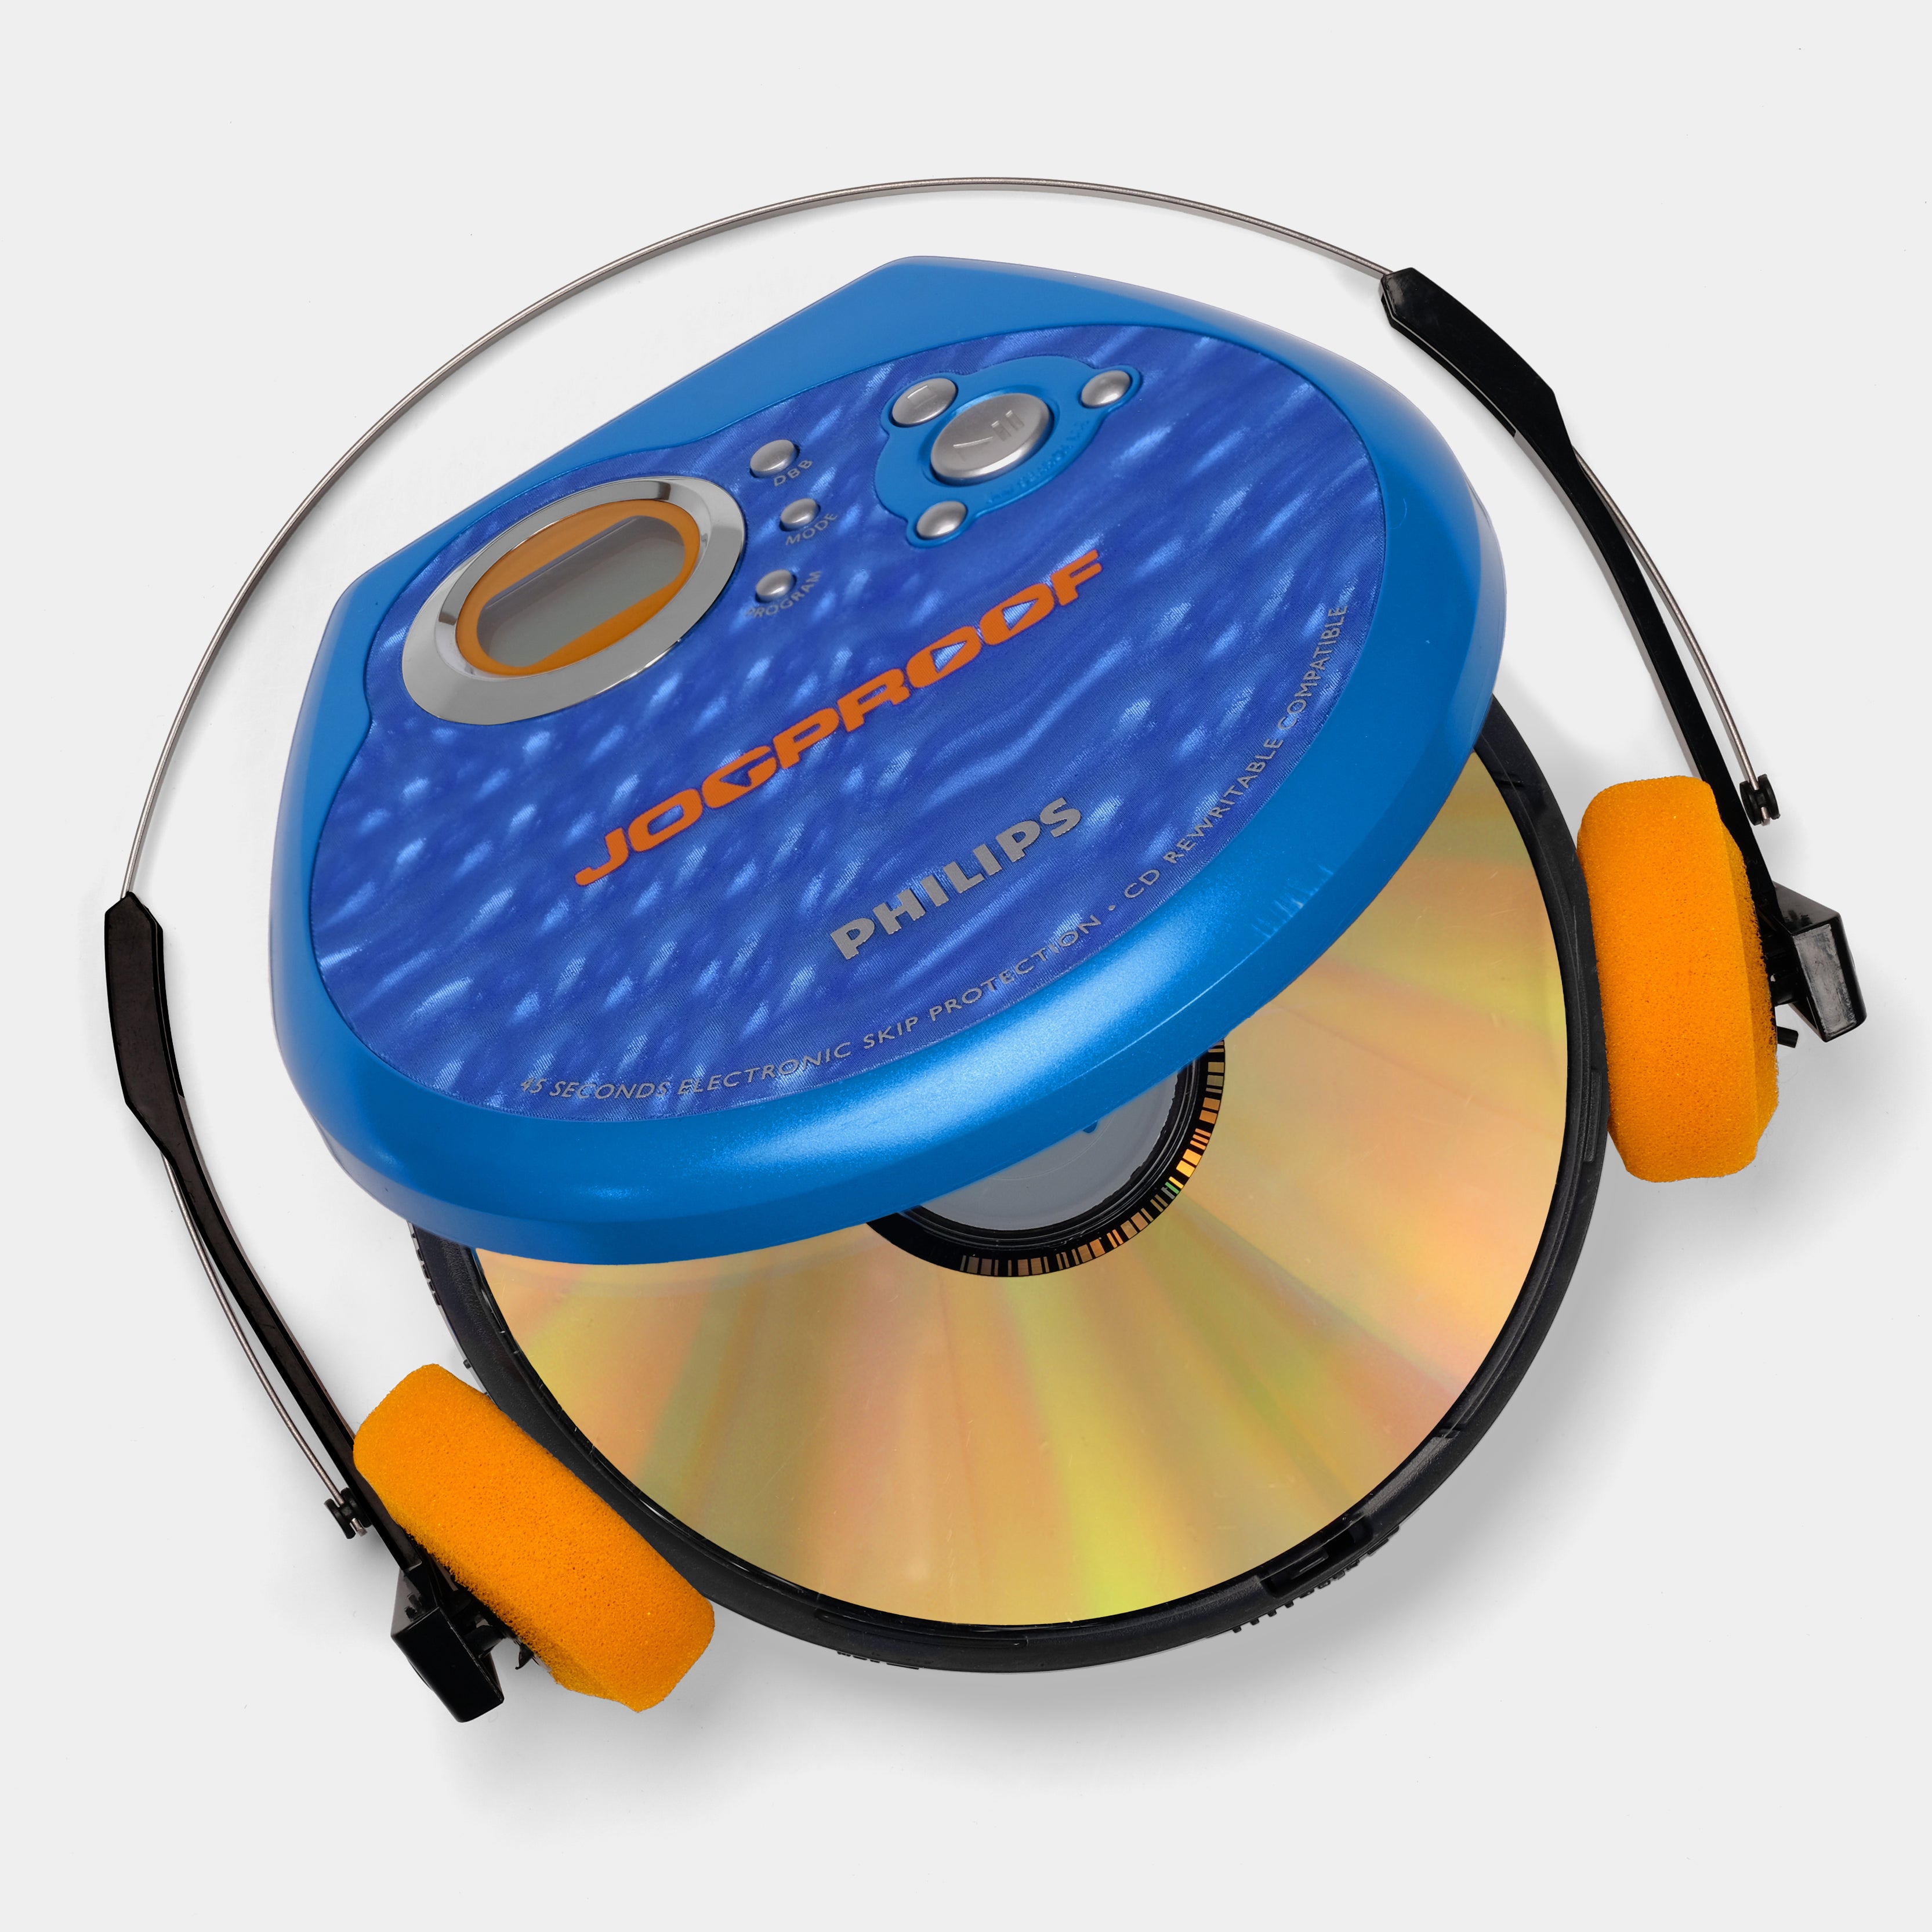 Philips Jogproof AX3218/17 Portable CD Player